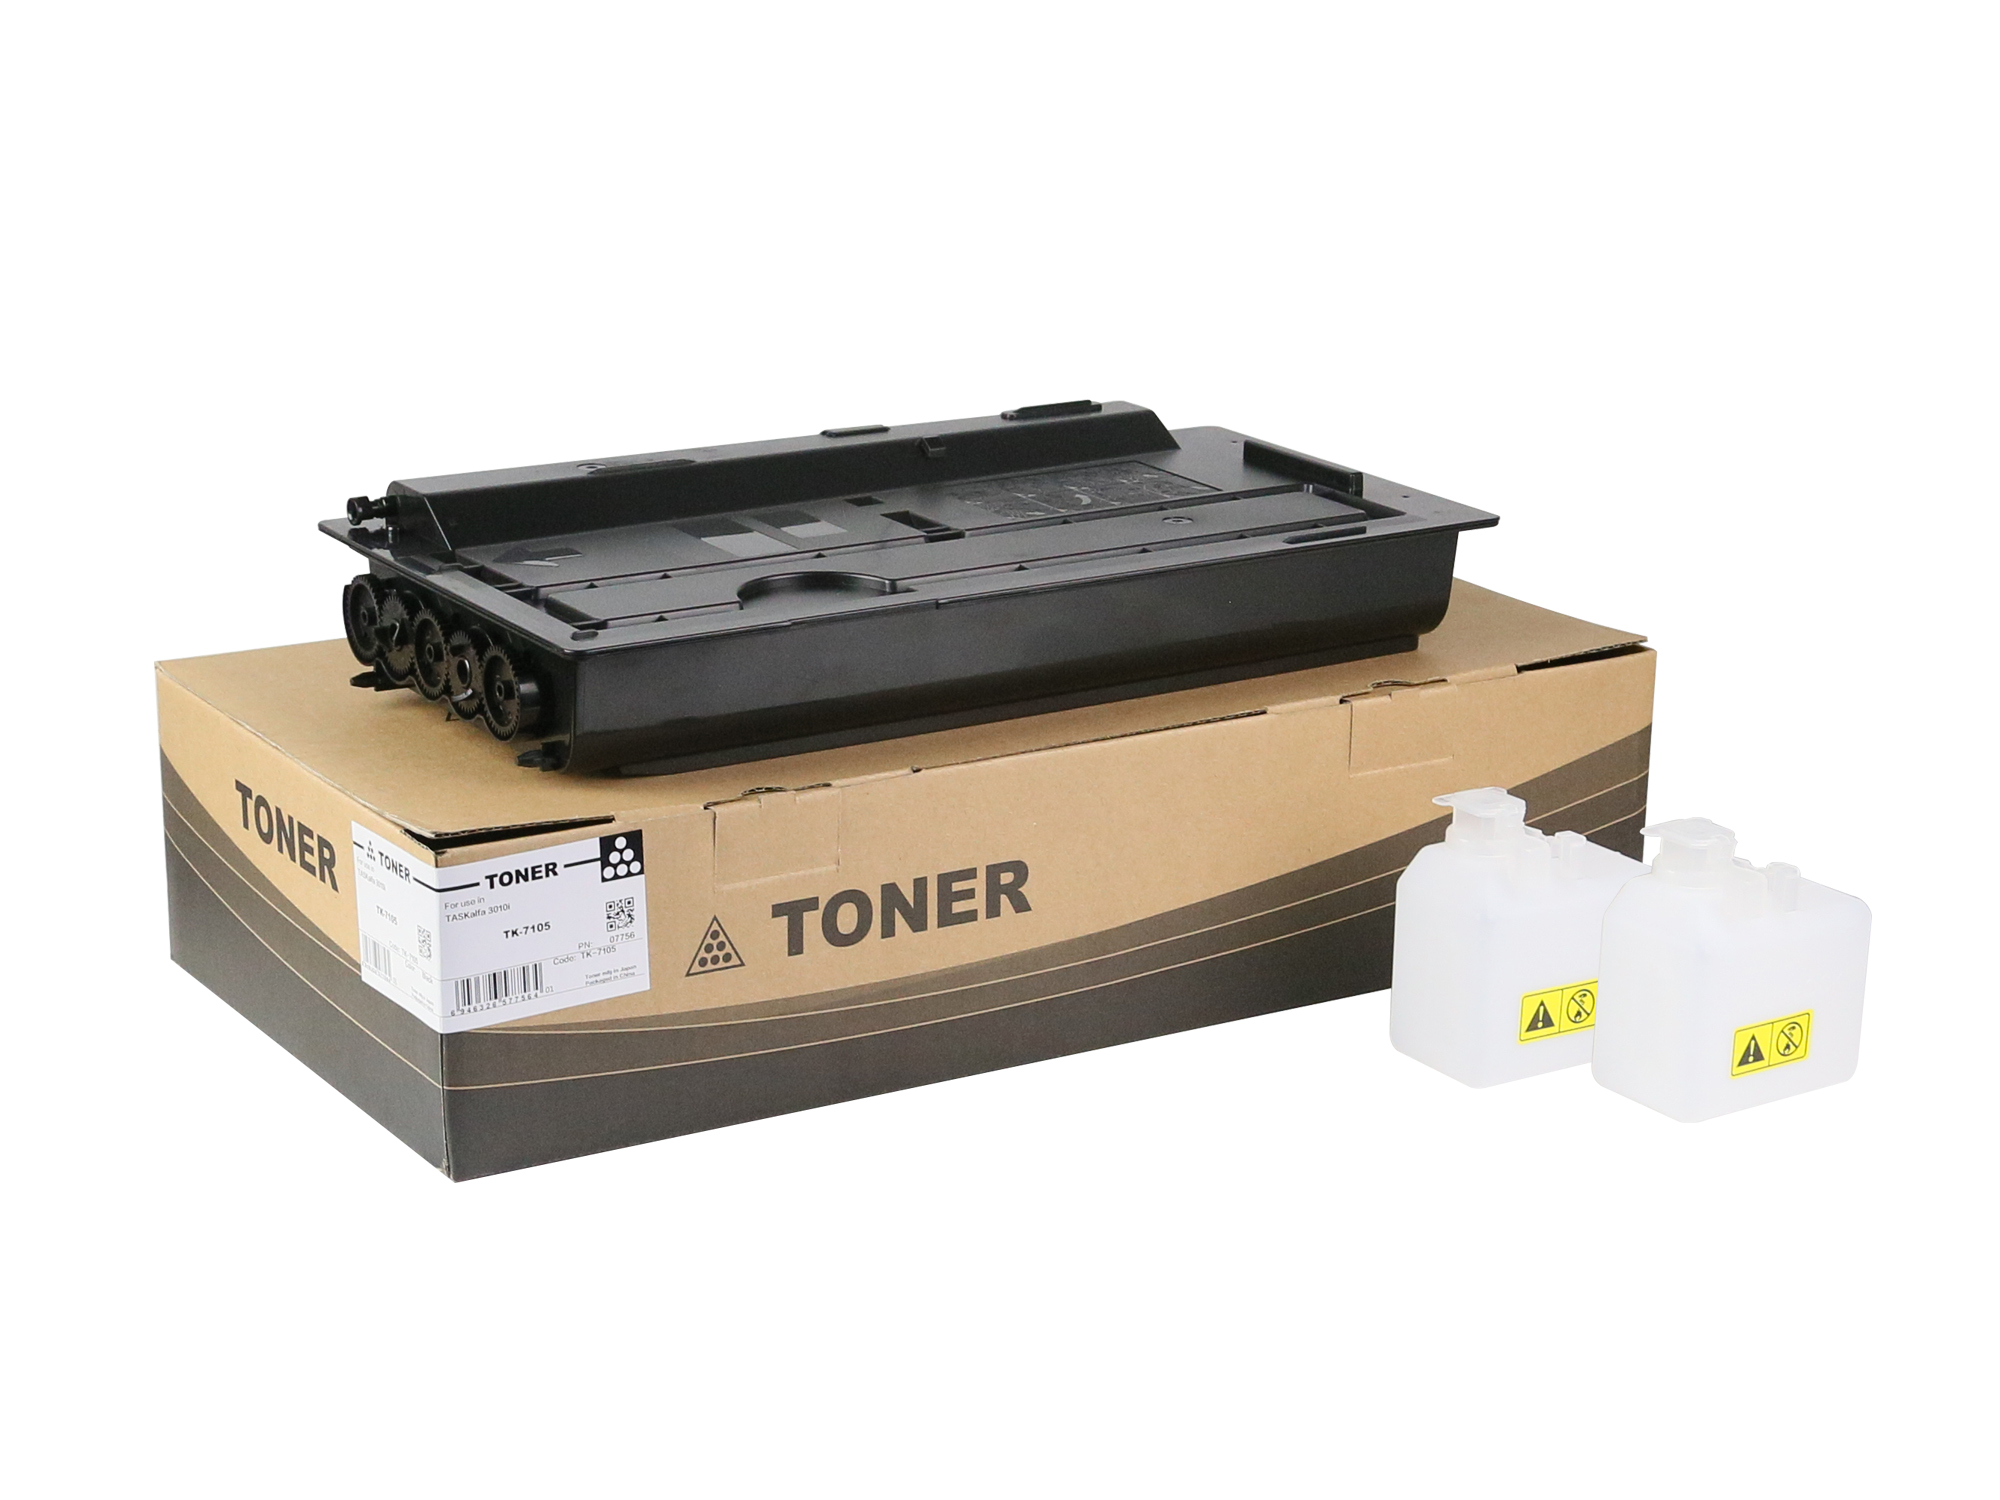 TK-7105 Toner Cartridge for Kyocera TASKalfa 3010i